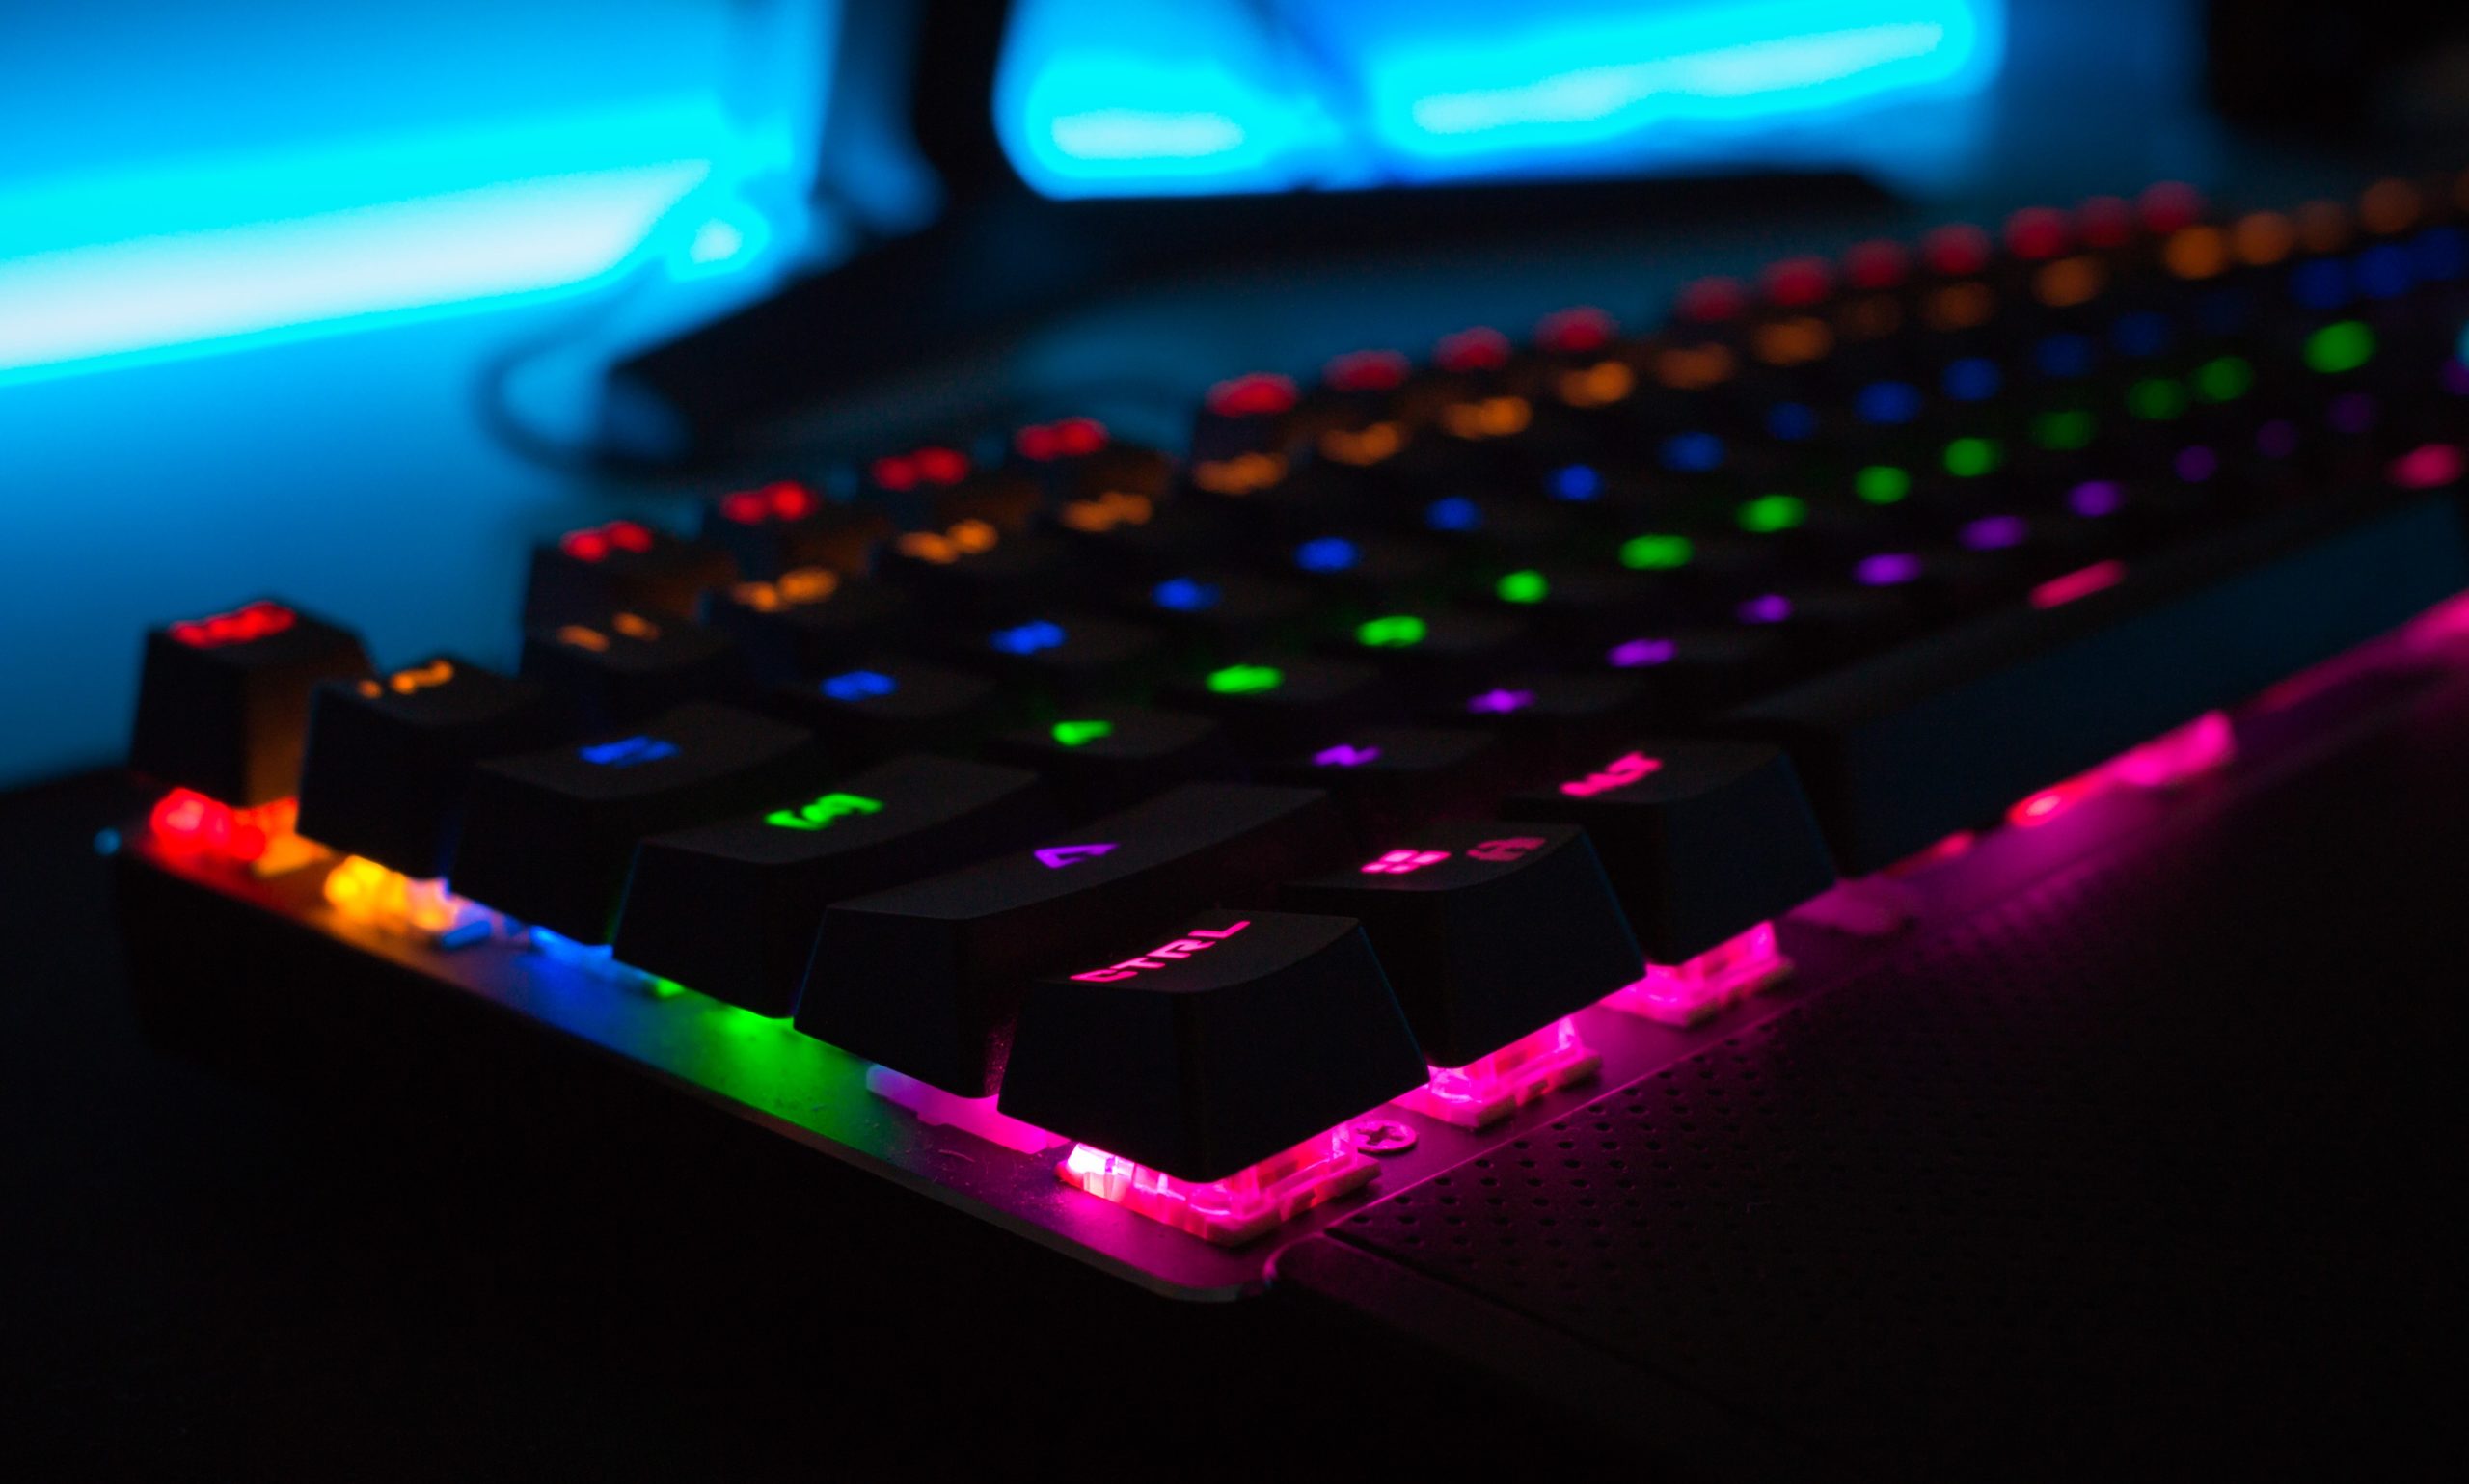 Image of a gaming keyboard